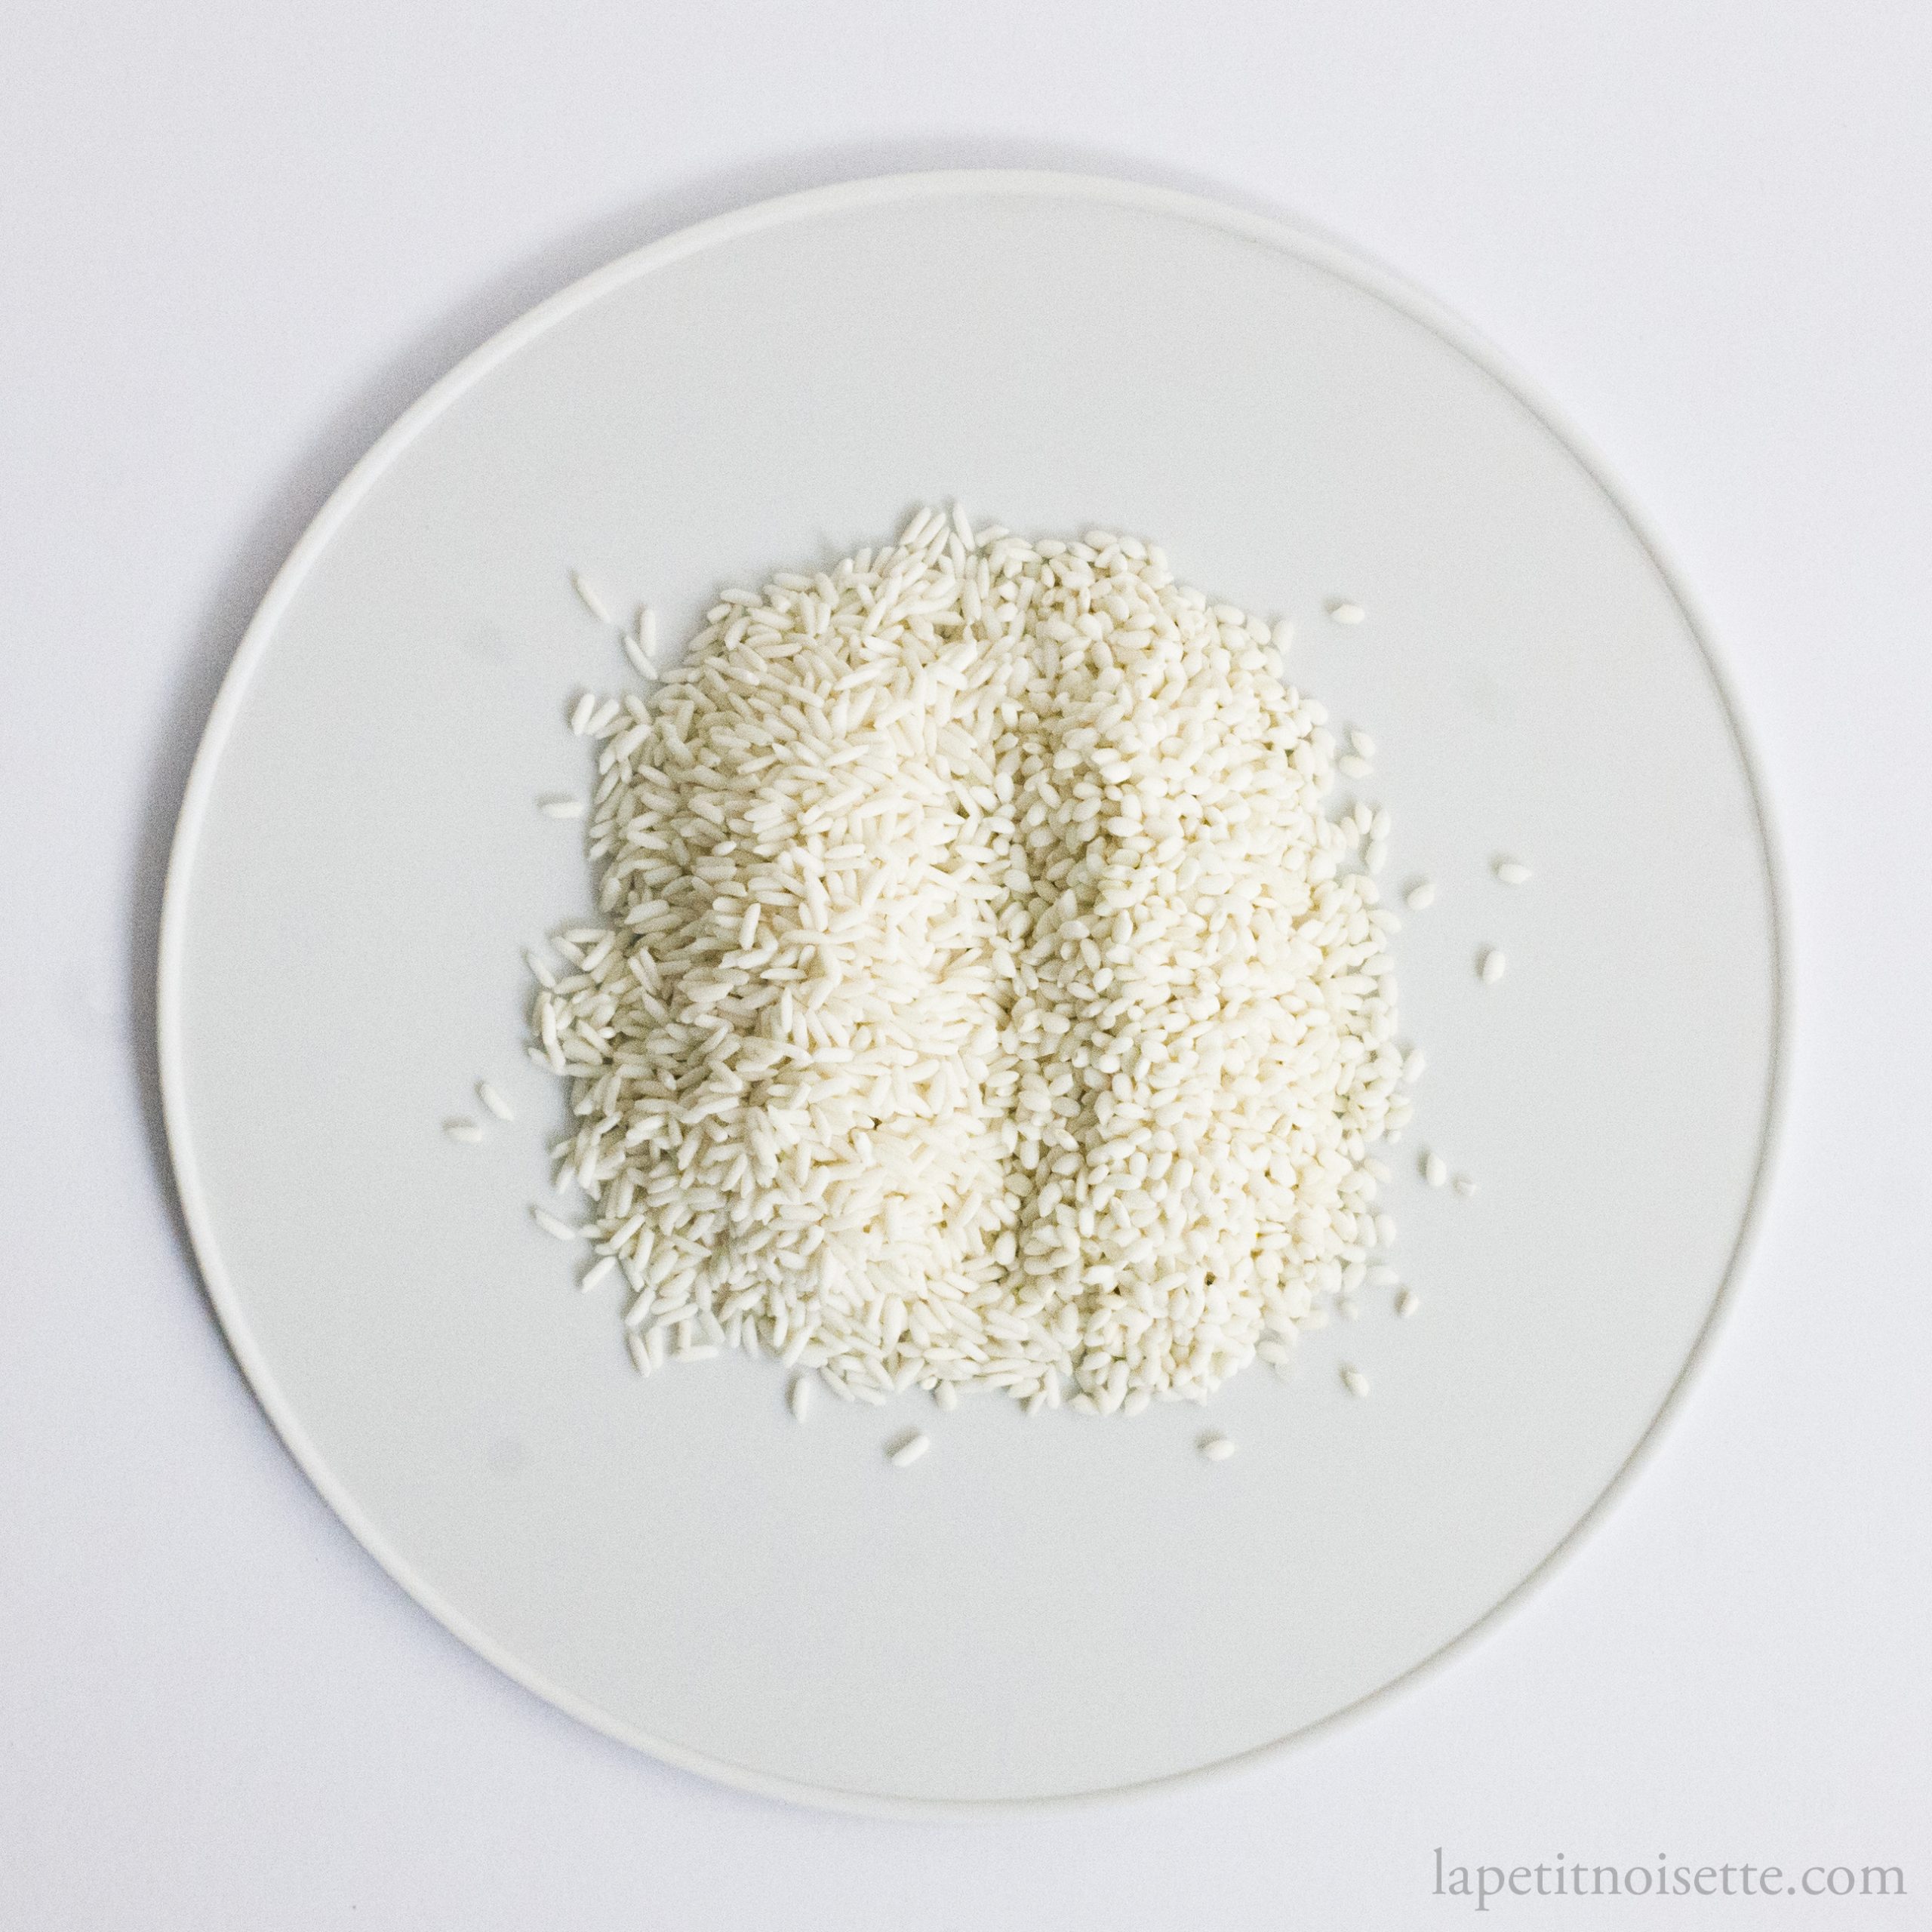 A side by side comparison of Short grain glutinous rice flour vs long grain glutinous rice flour